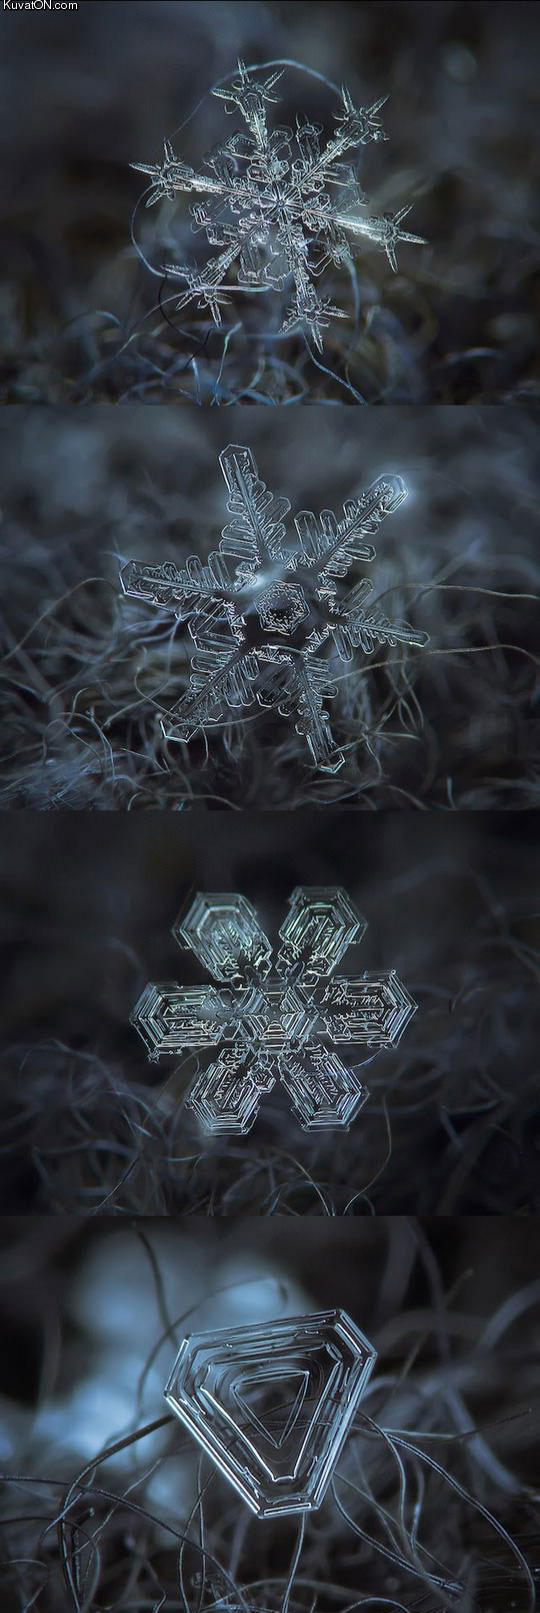 micro_photography_of_individual_snowflakes.jpg